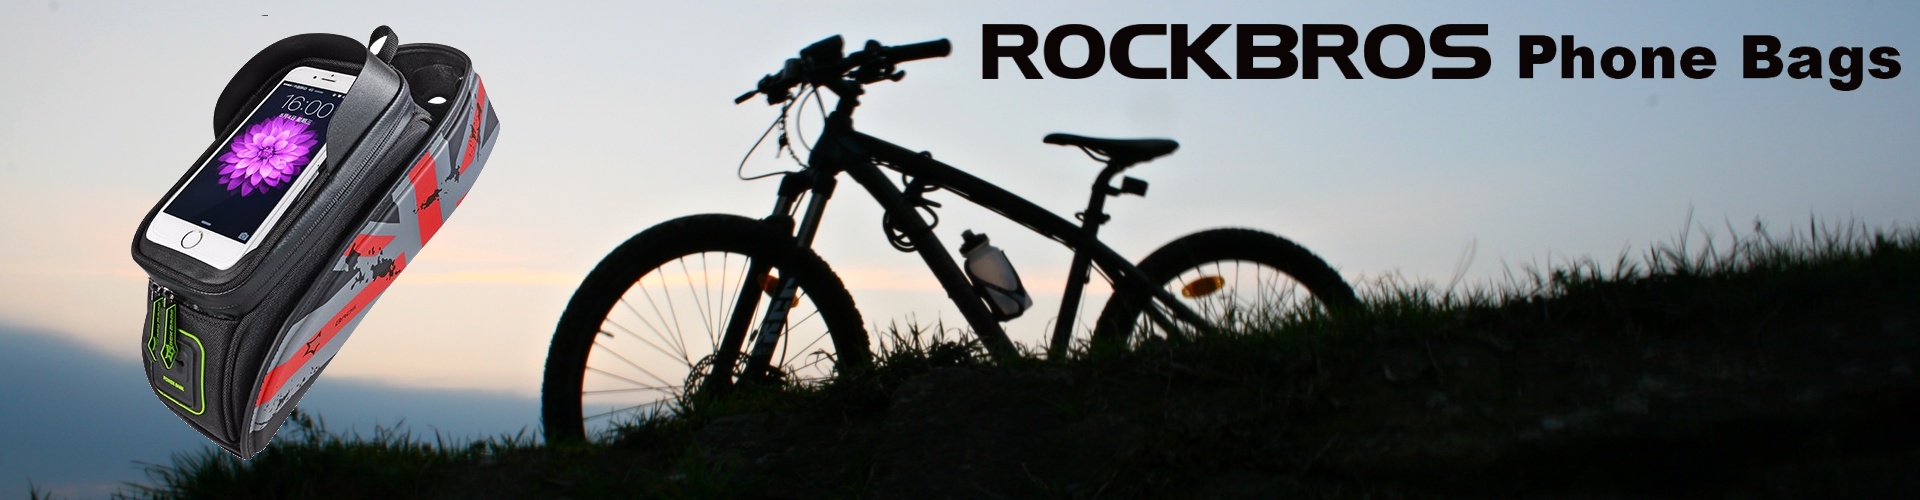 rockbros bike bag